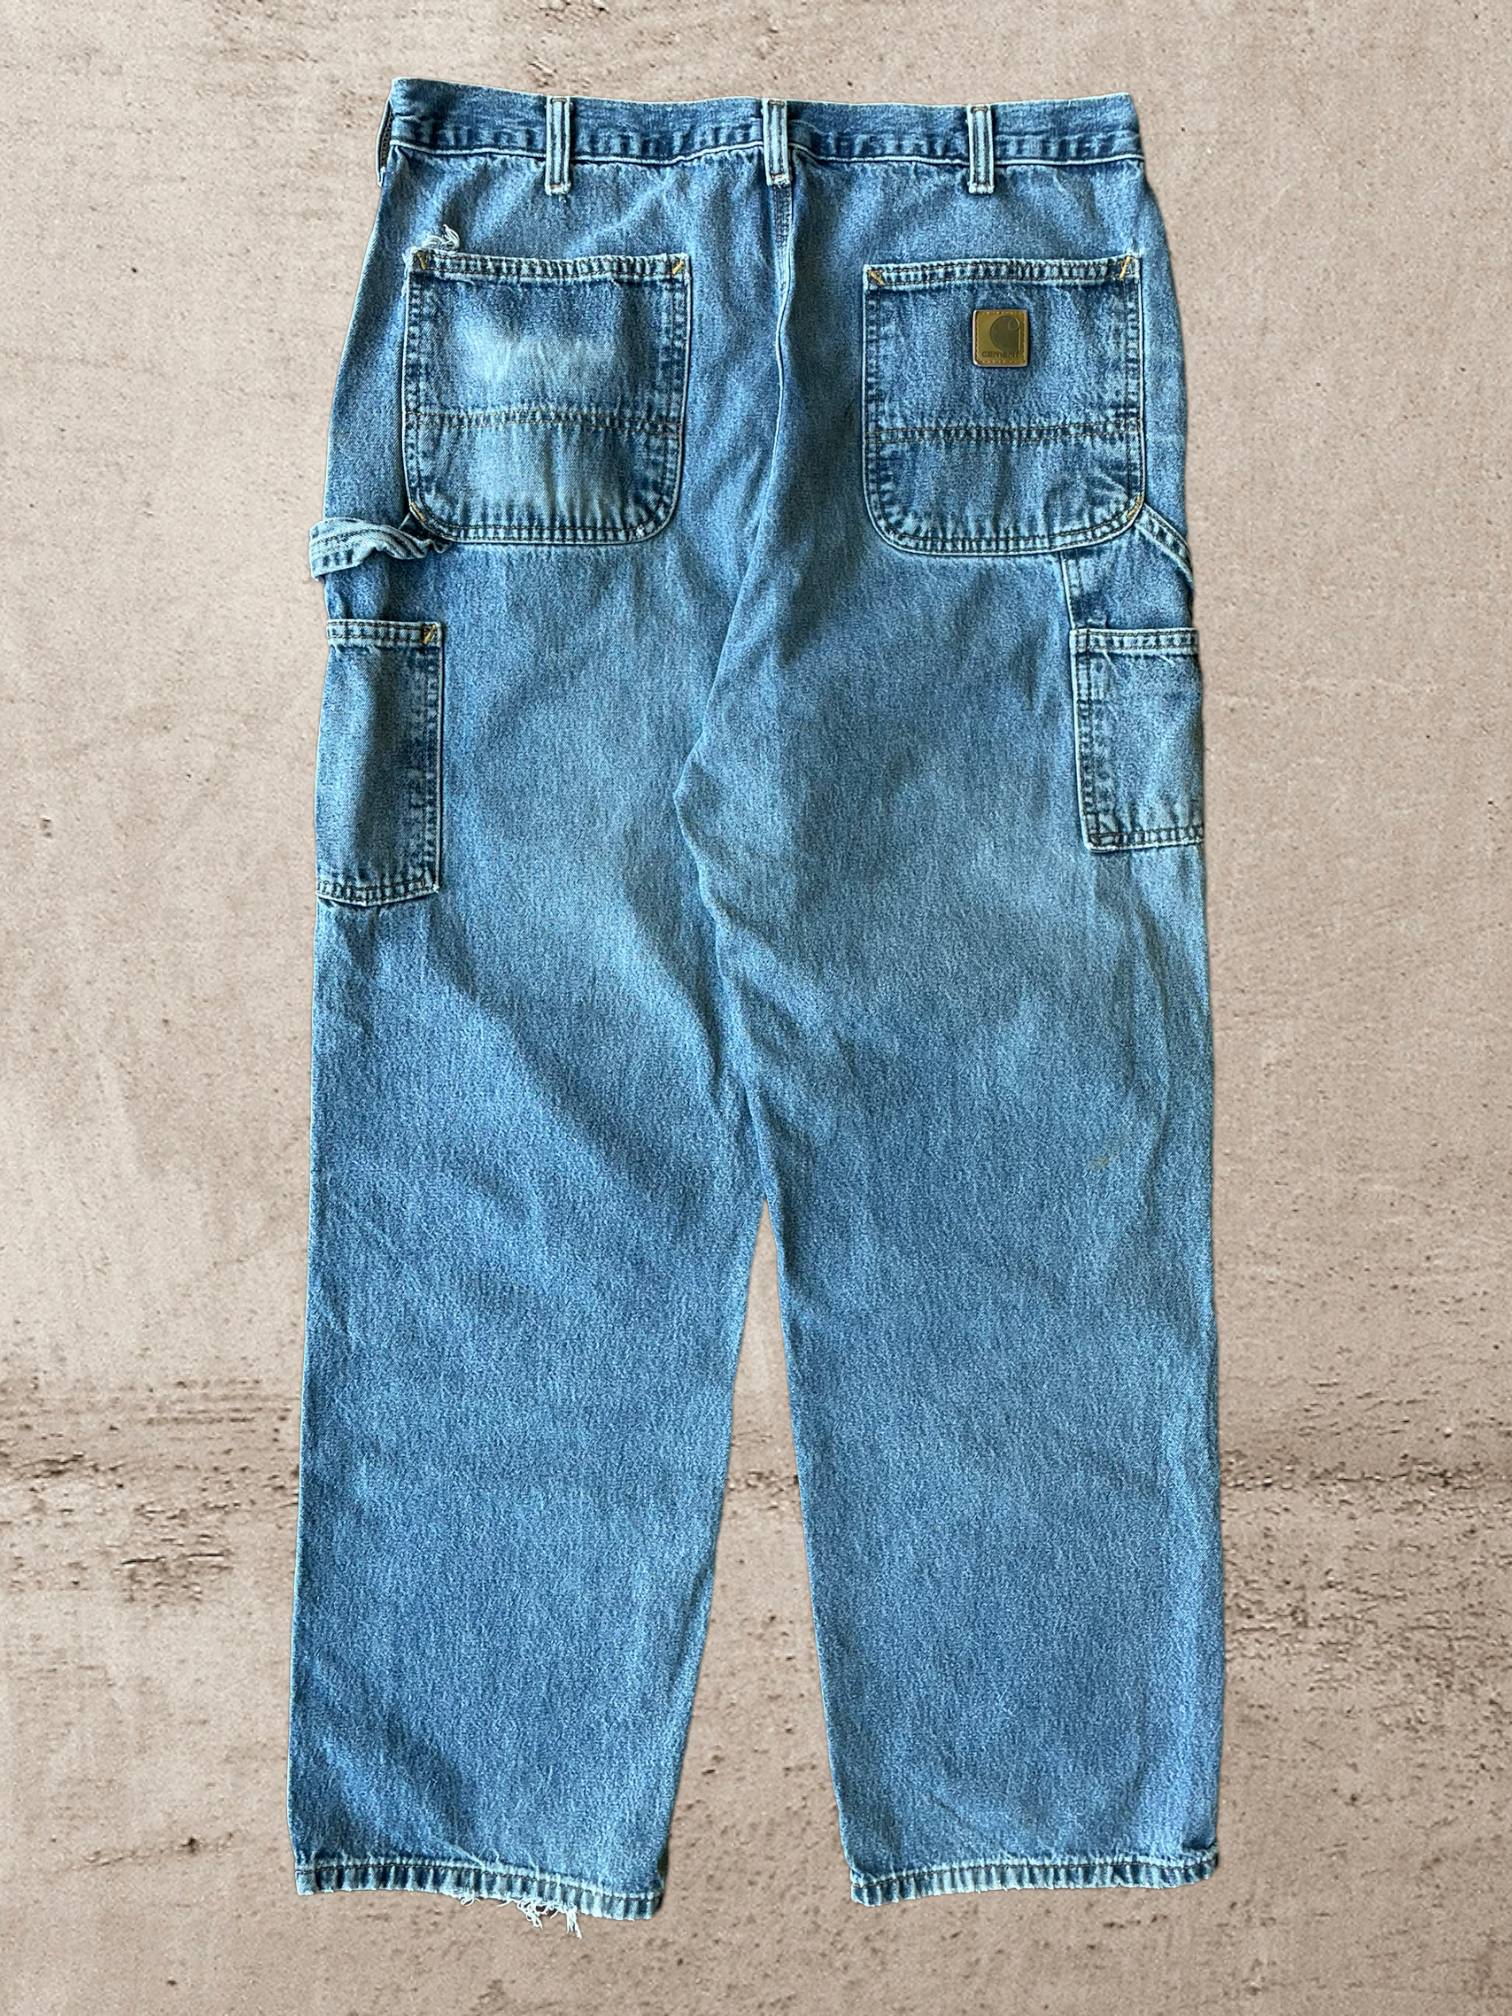 Vintage Carhartt Carpenter Jeans - 35x30